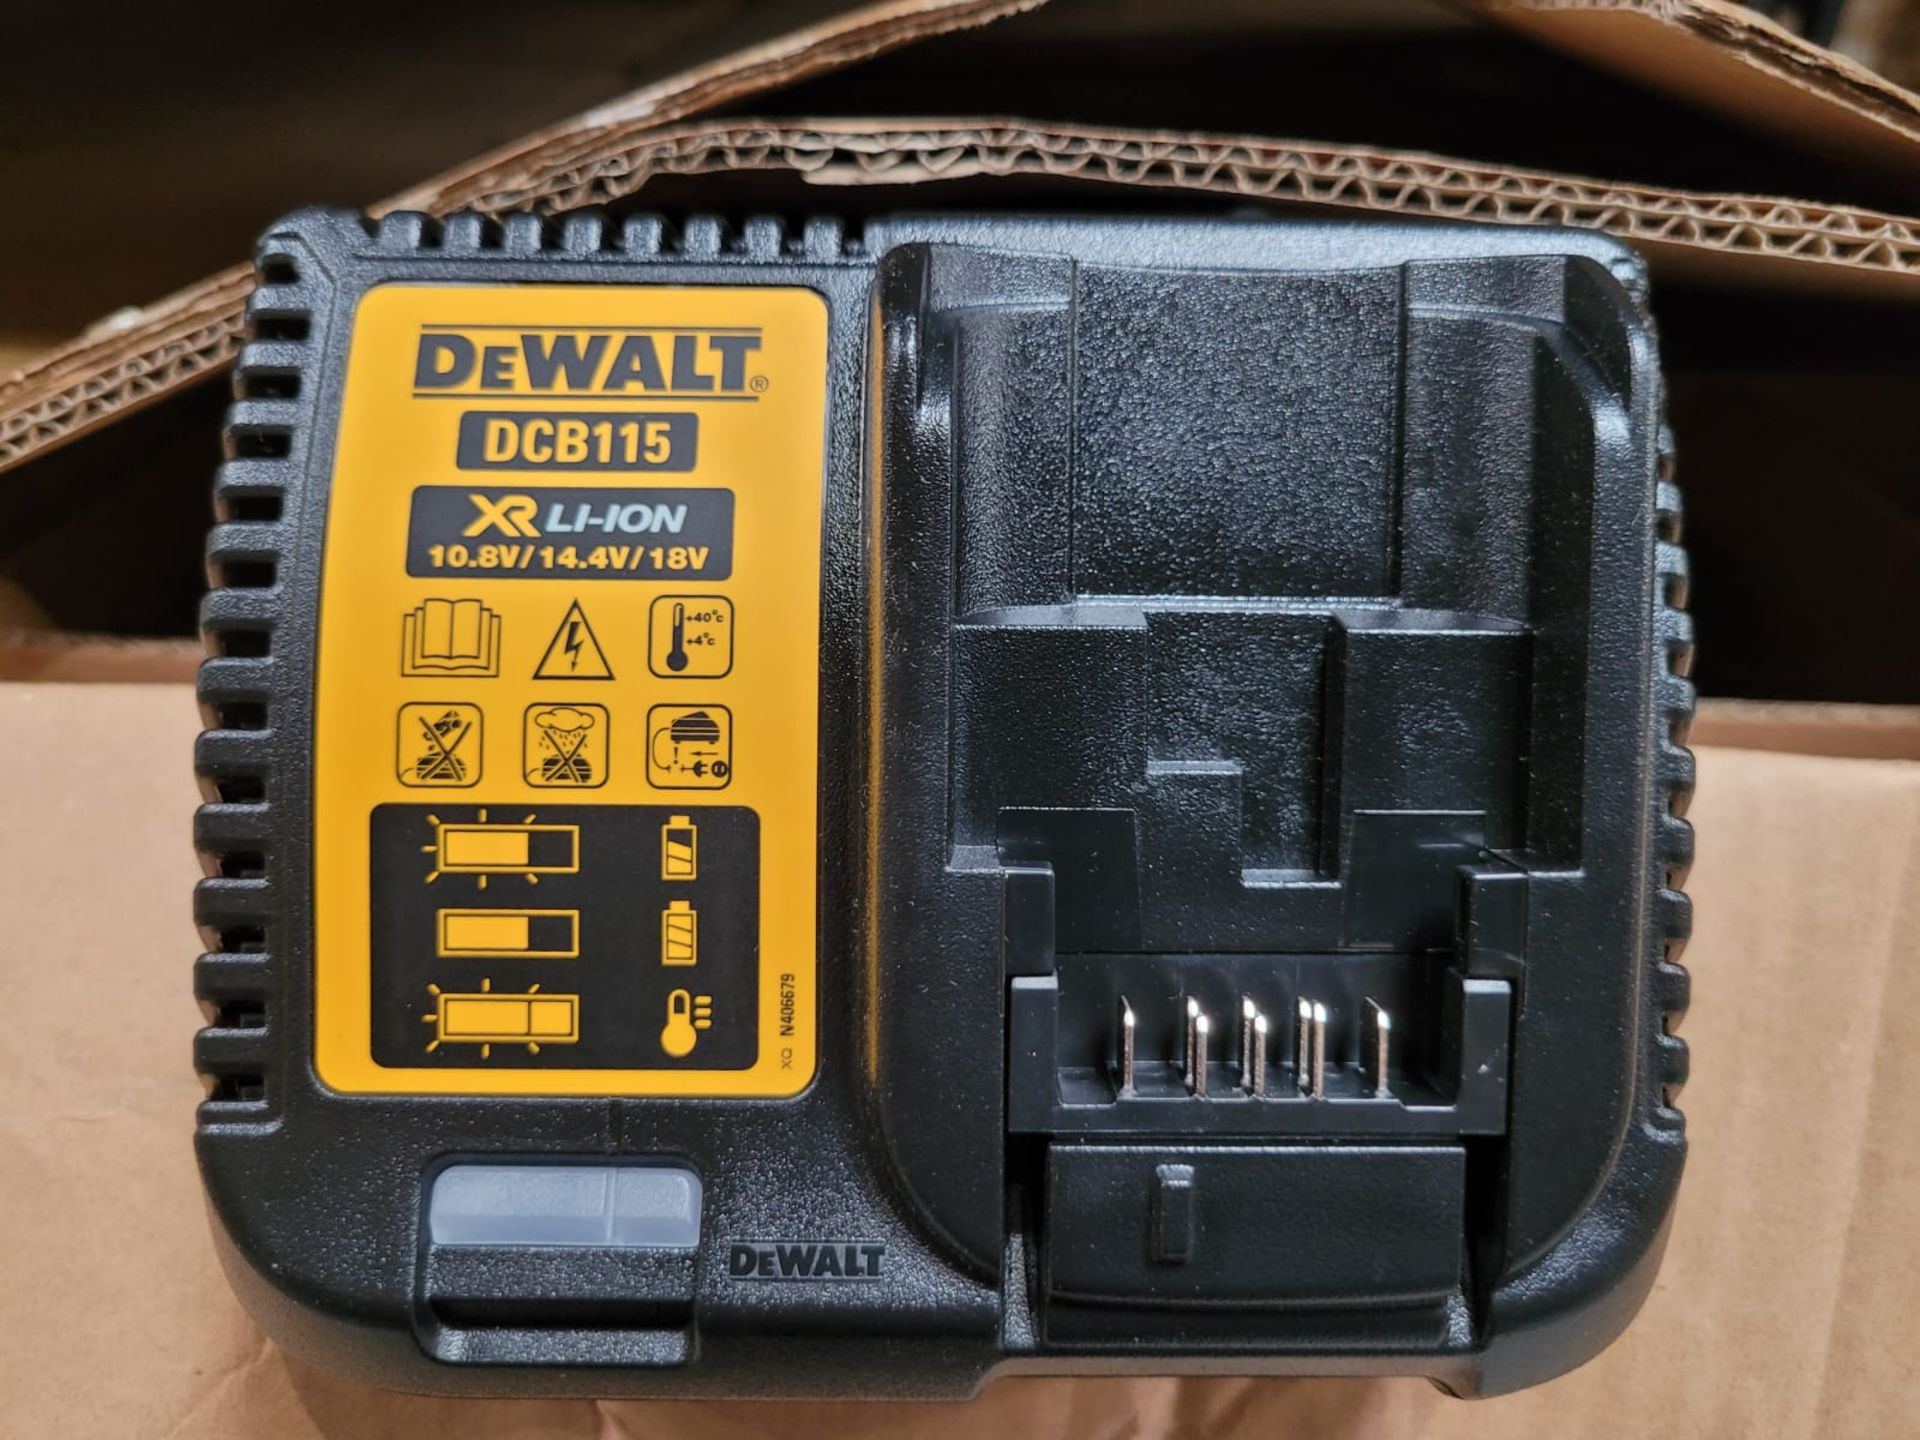 Dewalt charger brand new - Image 2 of 4